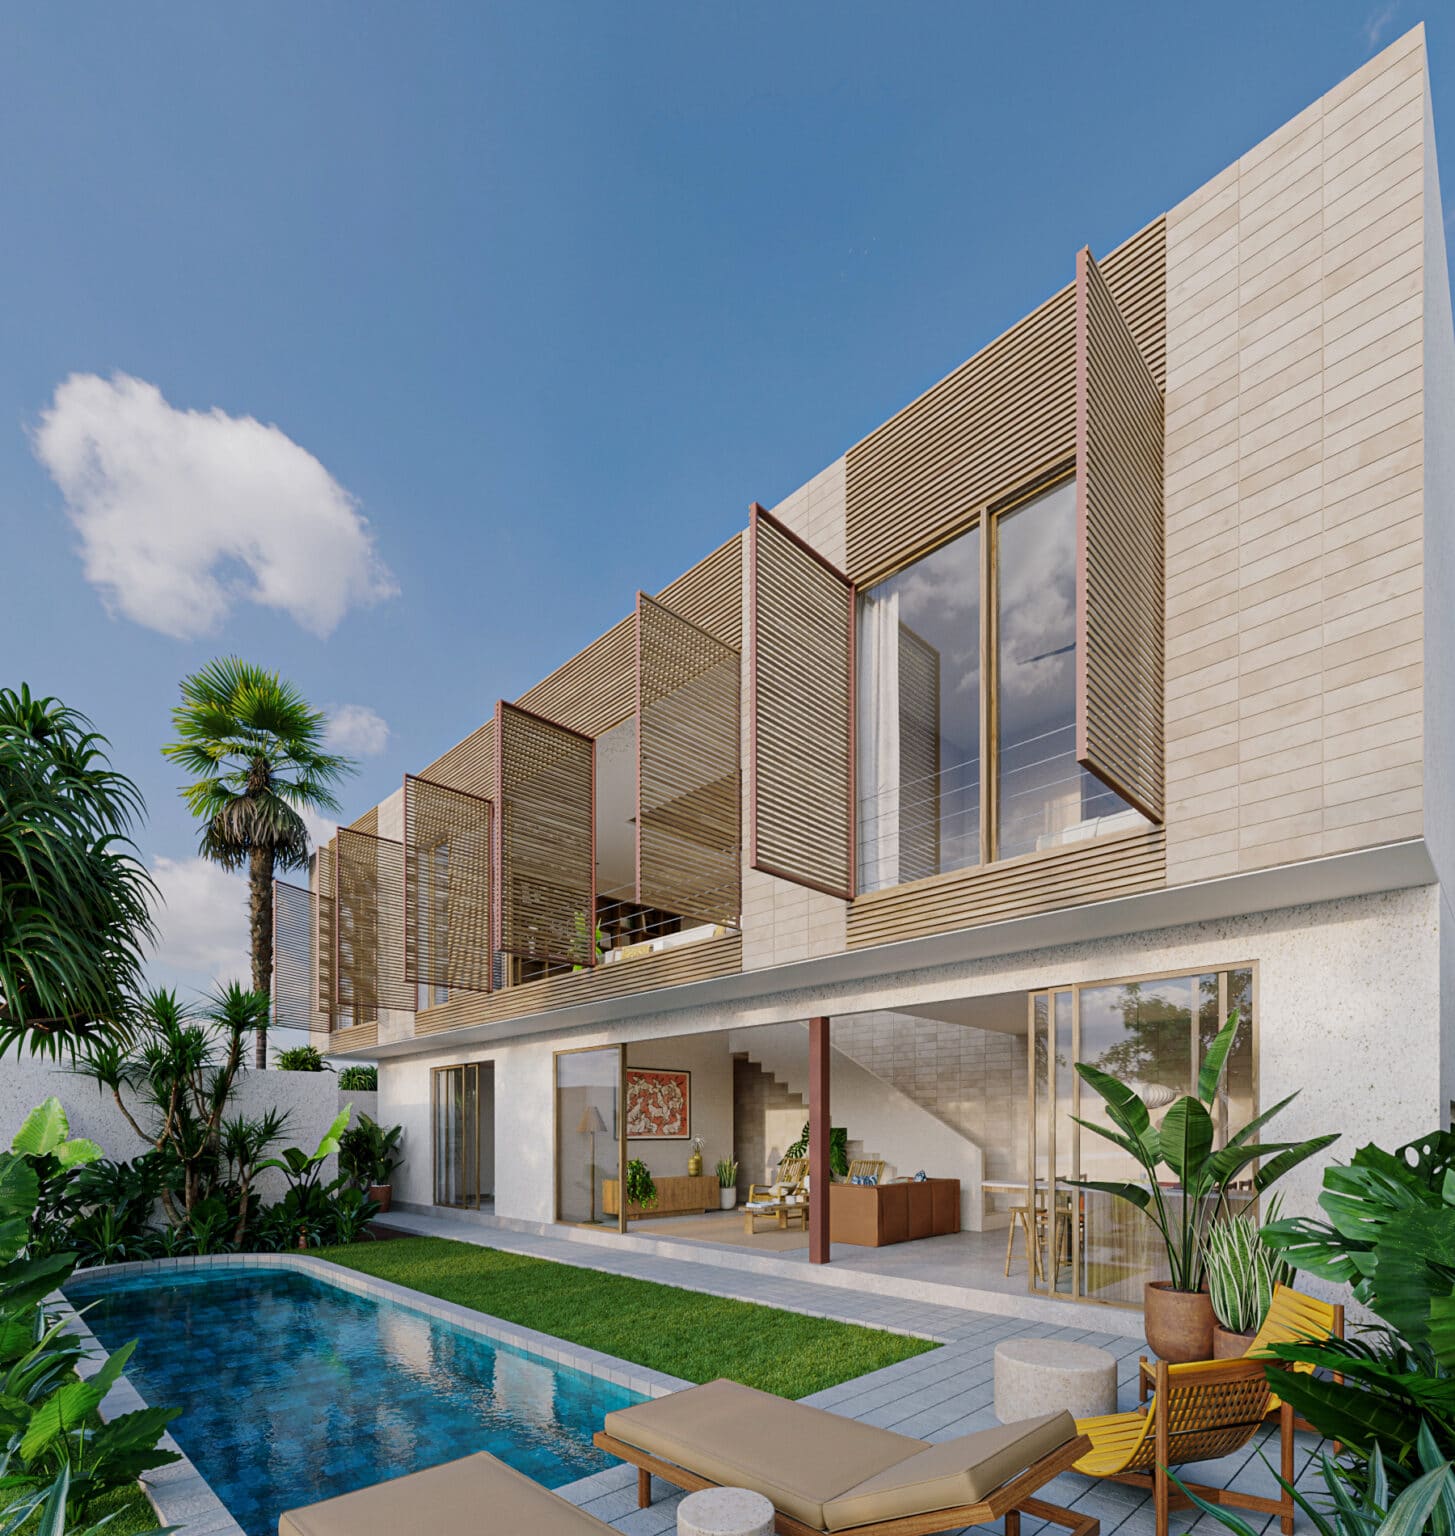 Design Assembly - Suku House - Bali Architect - Interior Design - Bali Villa - Swimming Pool - Wooden Facade - Building Facade